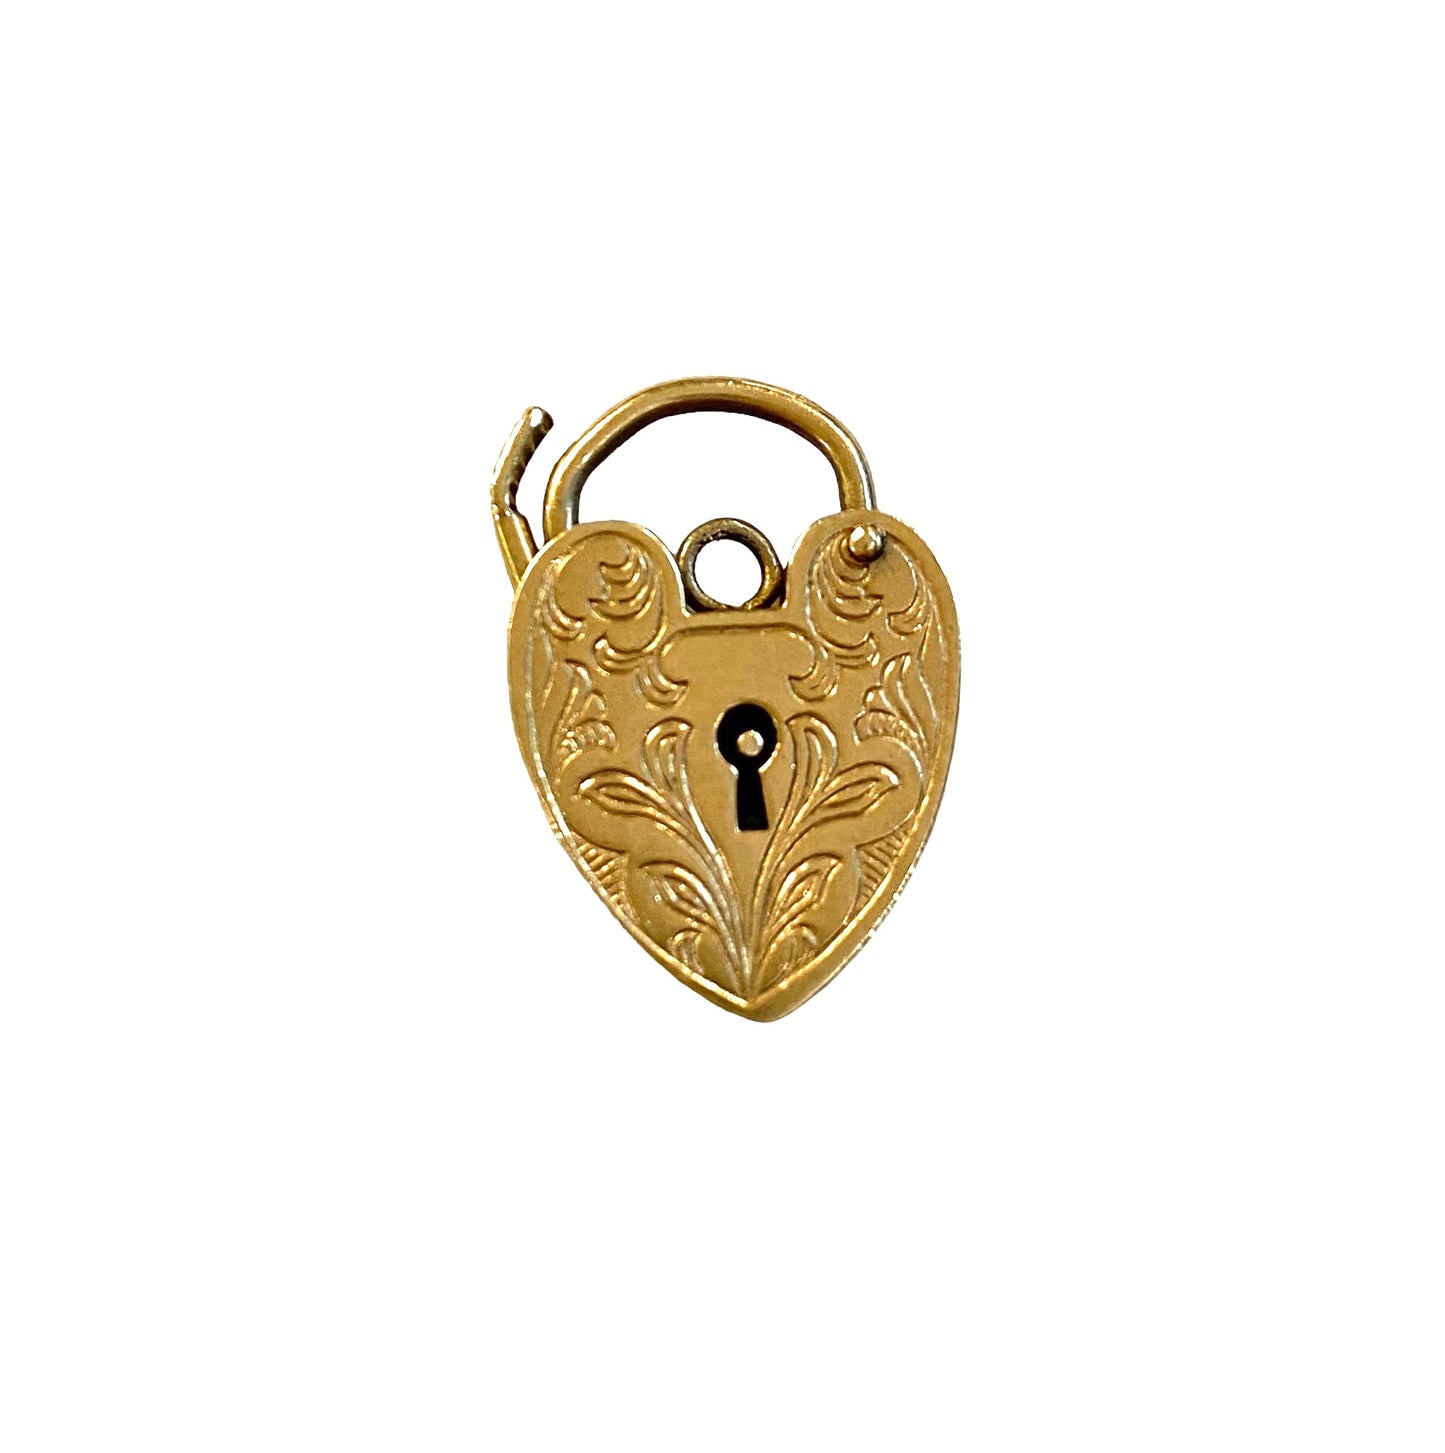 9ct vintage gold ornate padlock / pendant